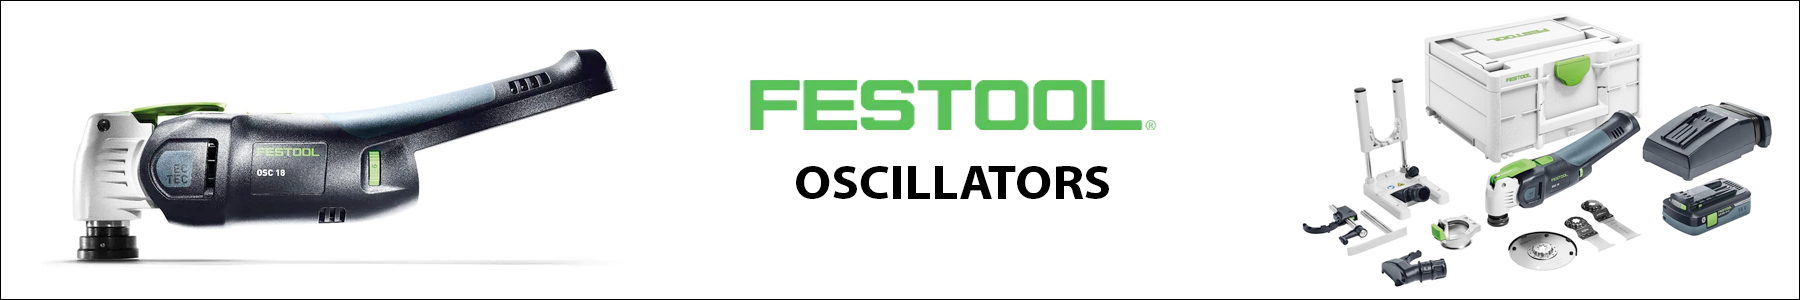 Festool Oscillators